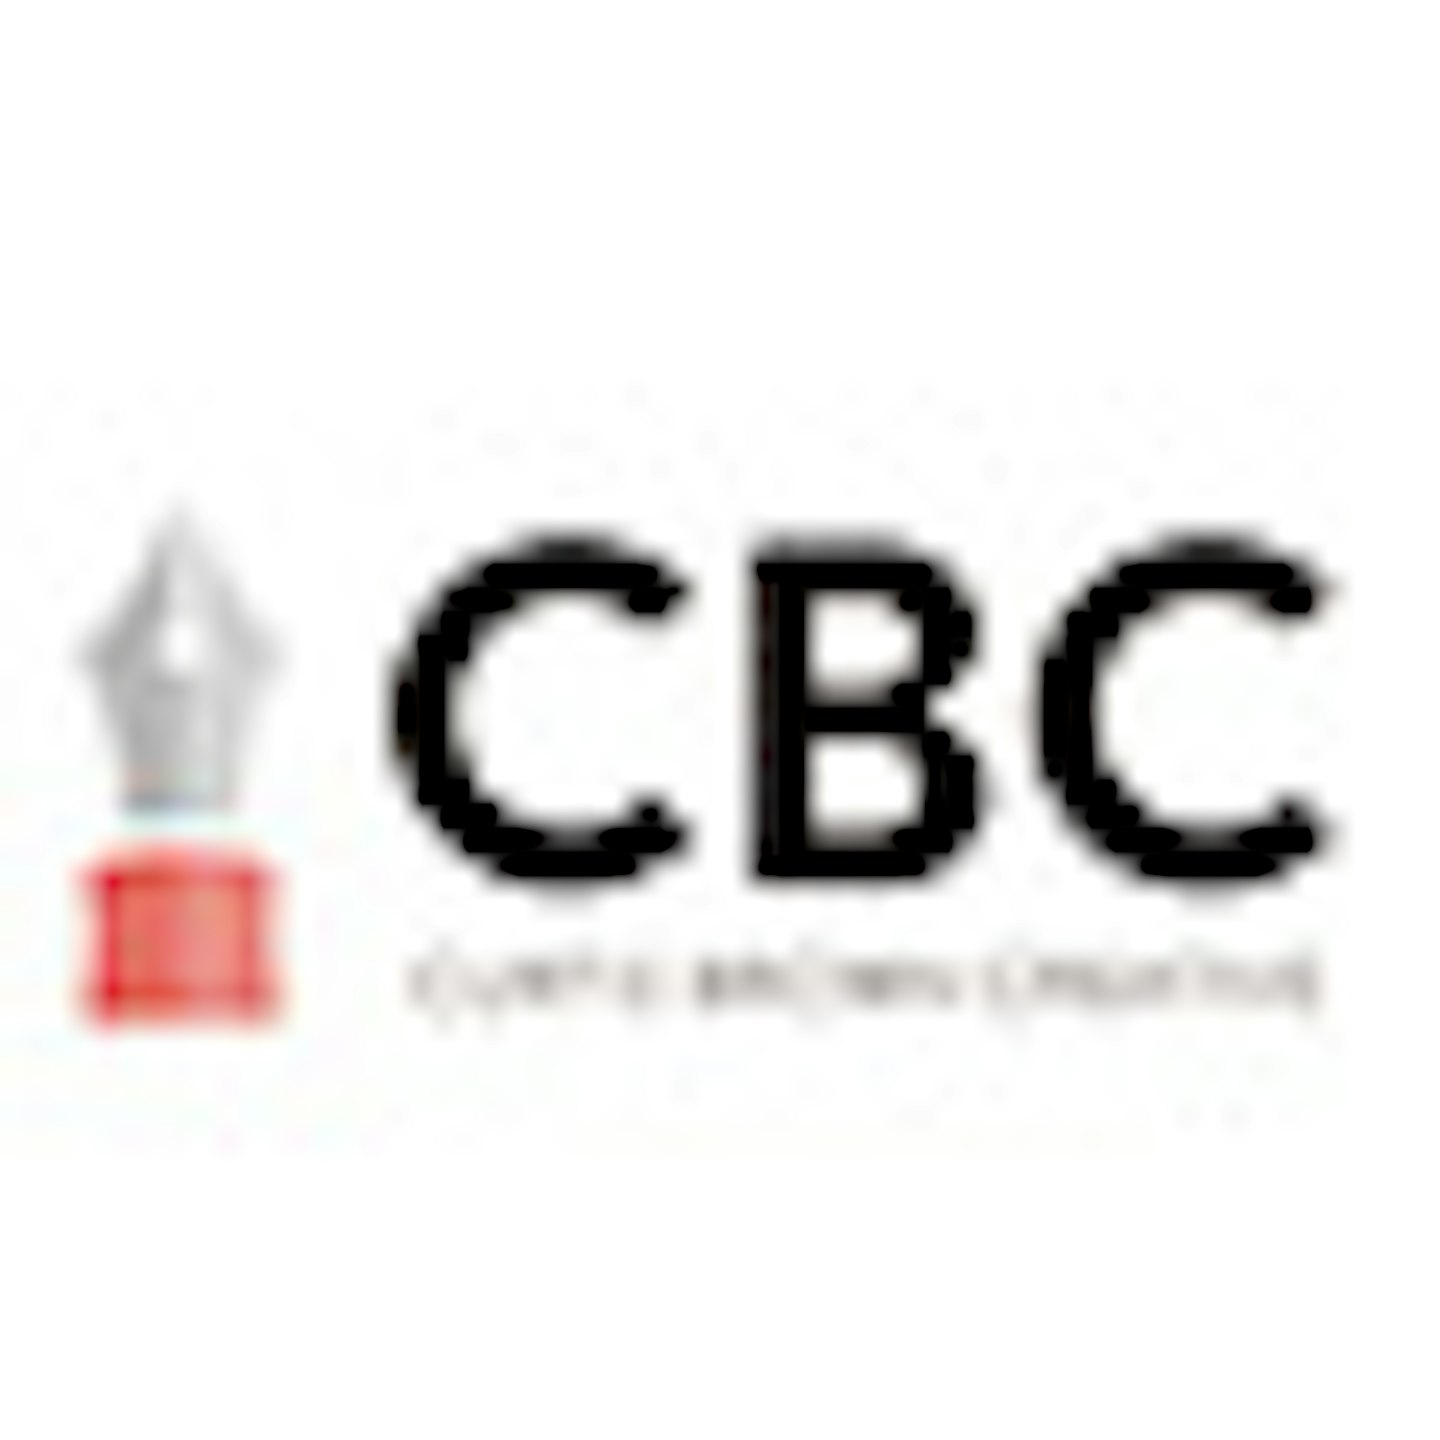 Curtis Brown Creative logo